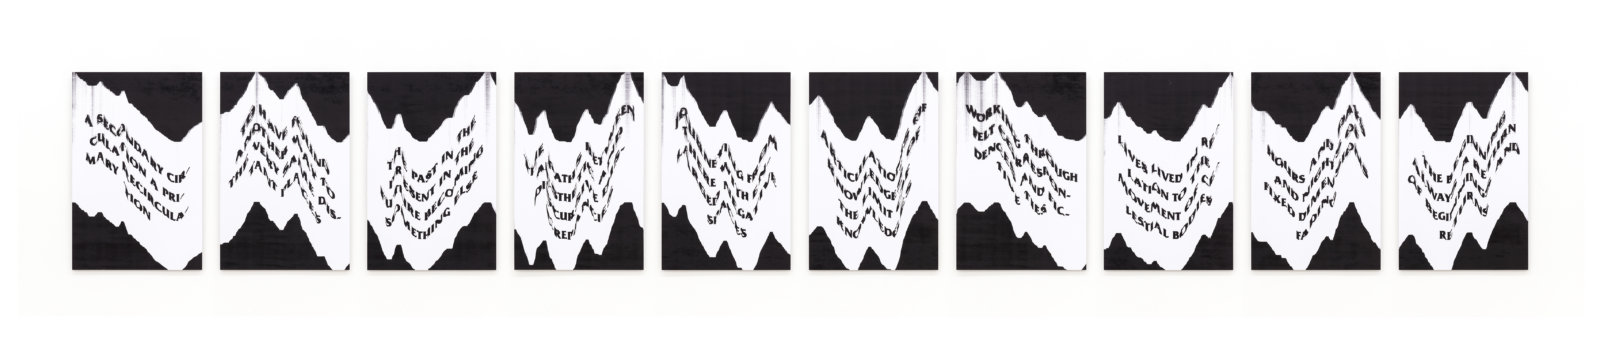 Raymond Boisjoly, Interlocutions, 2014, 10 plotter prints mounted on dibond, 10 pieces, each 16 x 24 in. (39 x 61 cm)